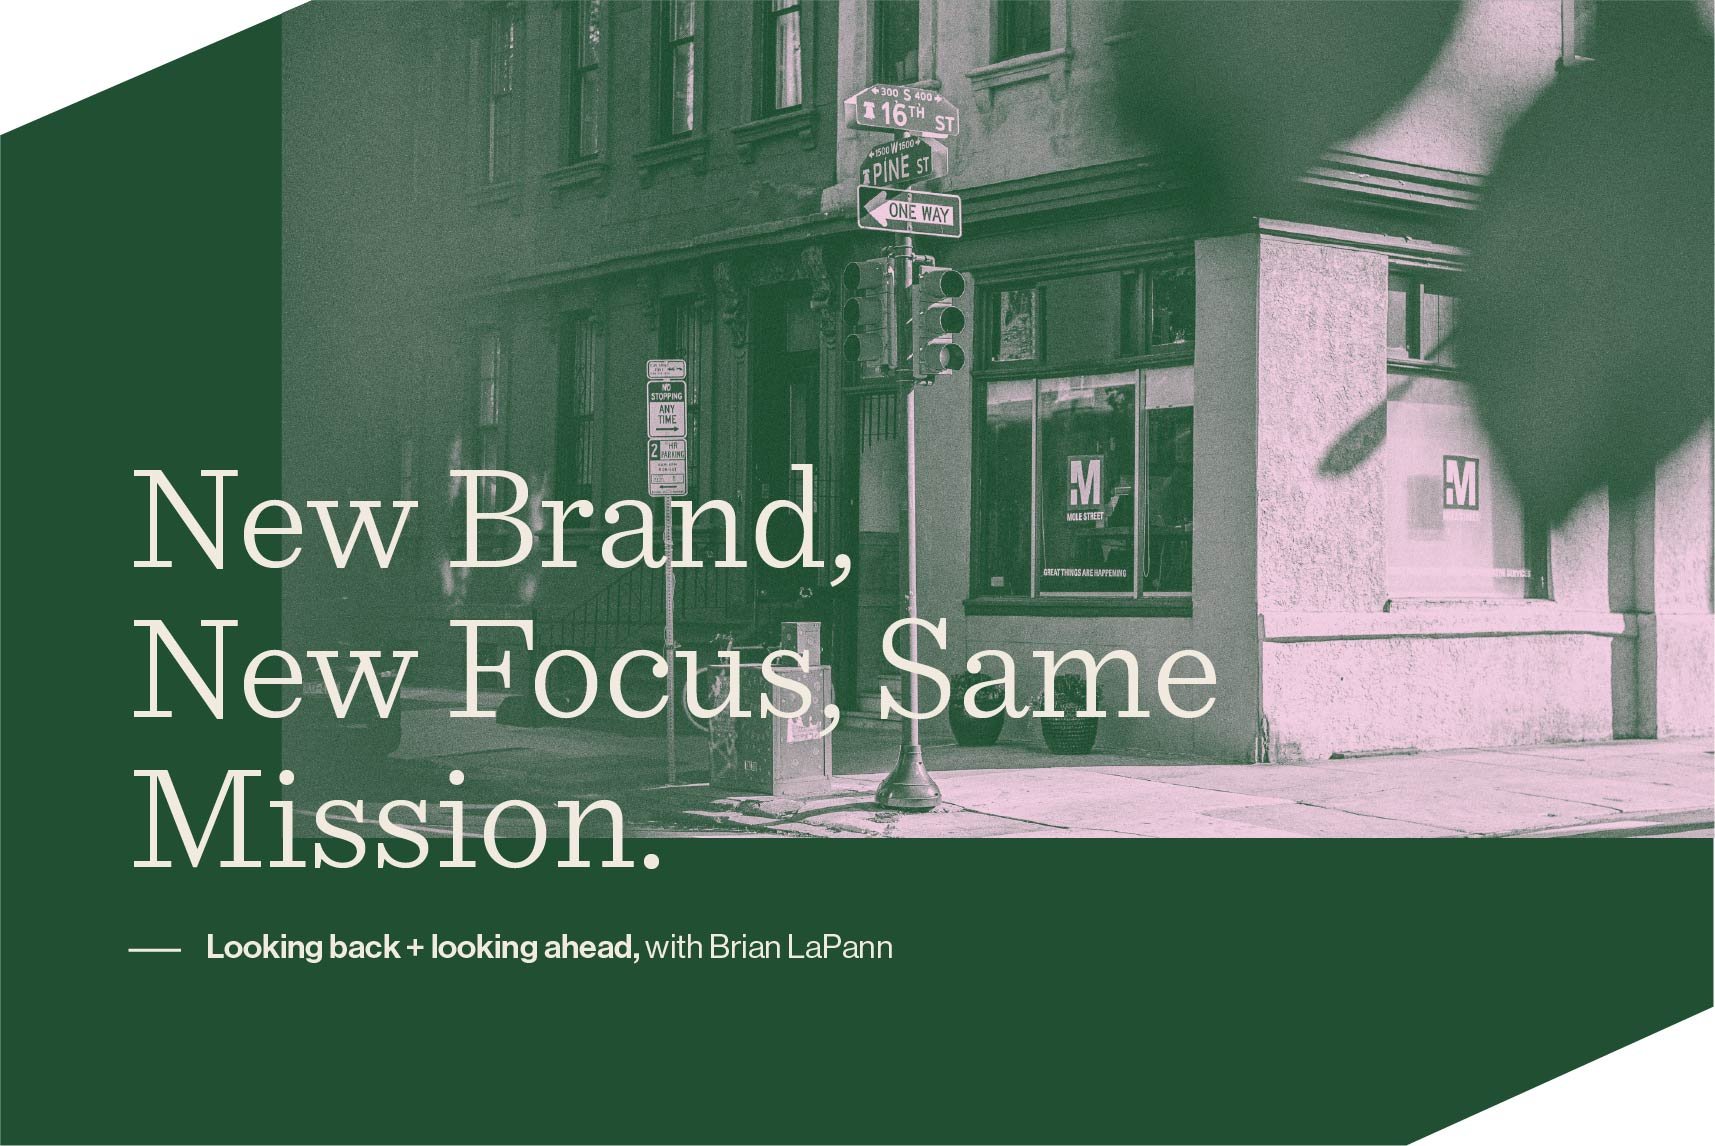 New Brand, New Focus, Same Mission